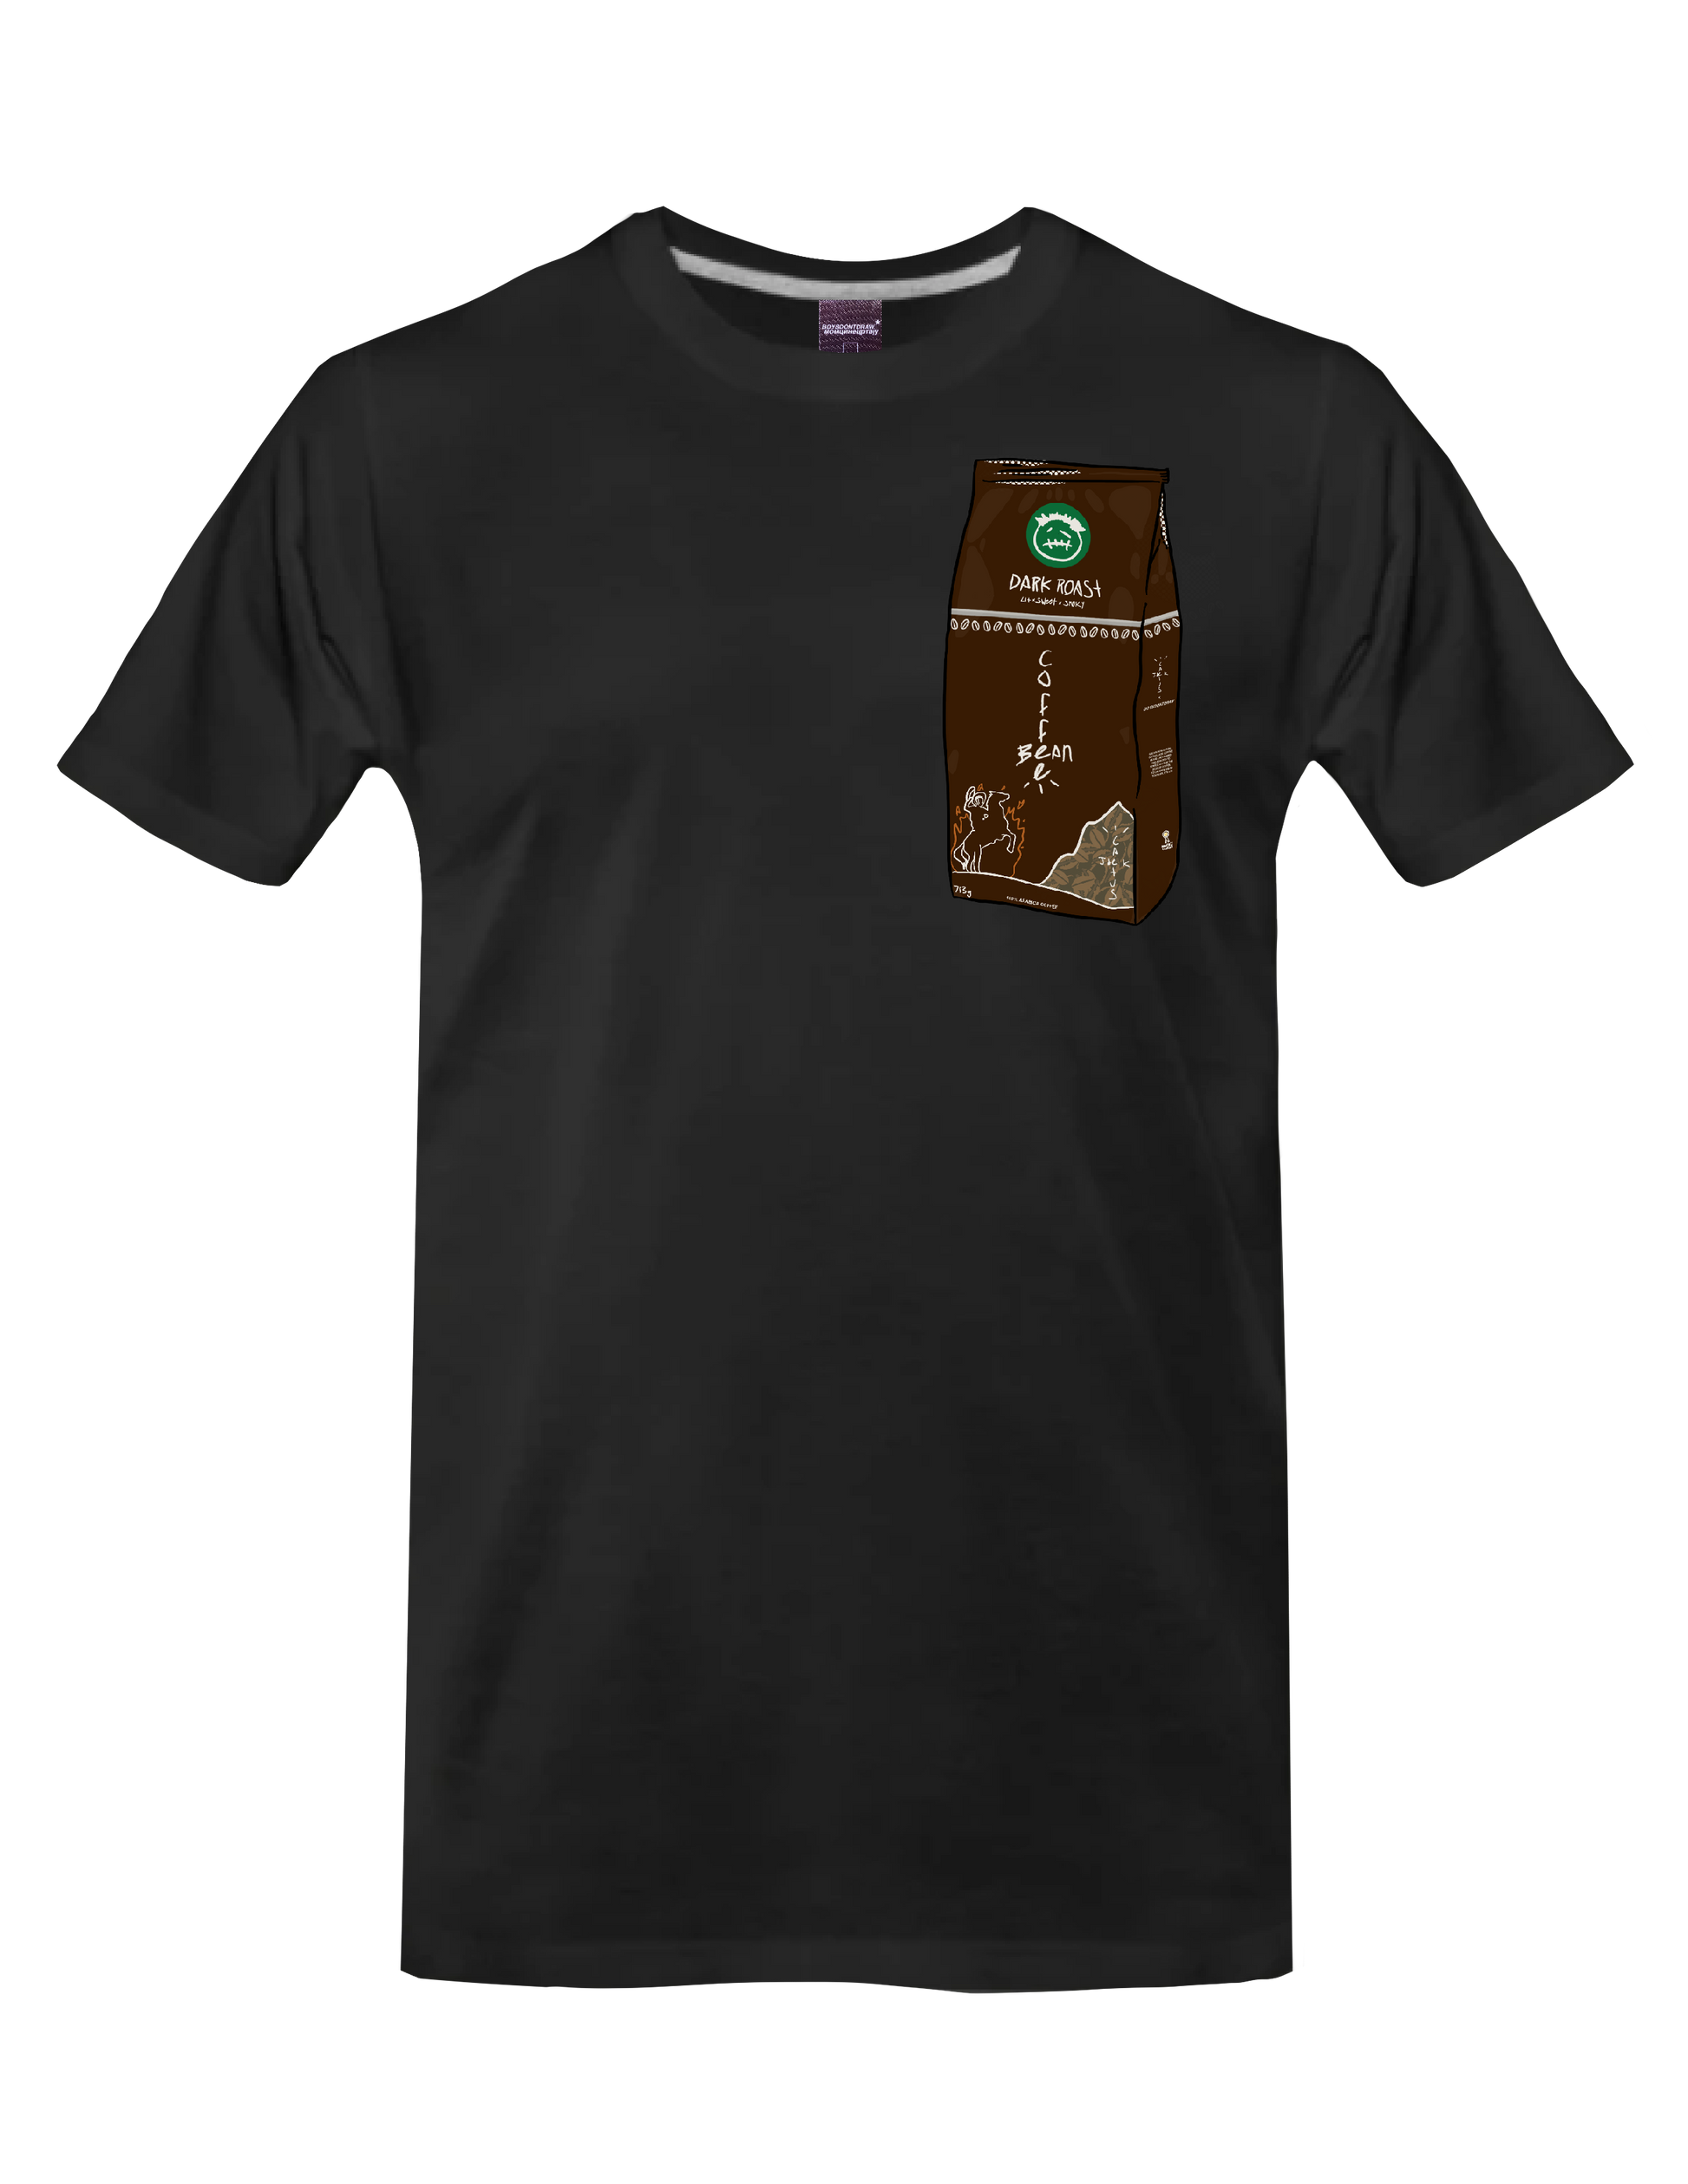 TRAVIS SCOTT - CACTUS JACK COFFEE BEAN - T-Shirt by BOYSDONTDRAW